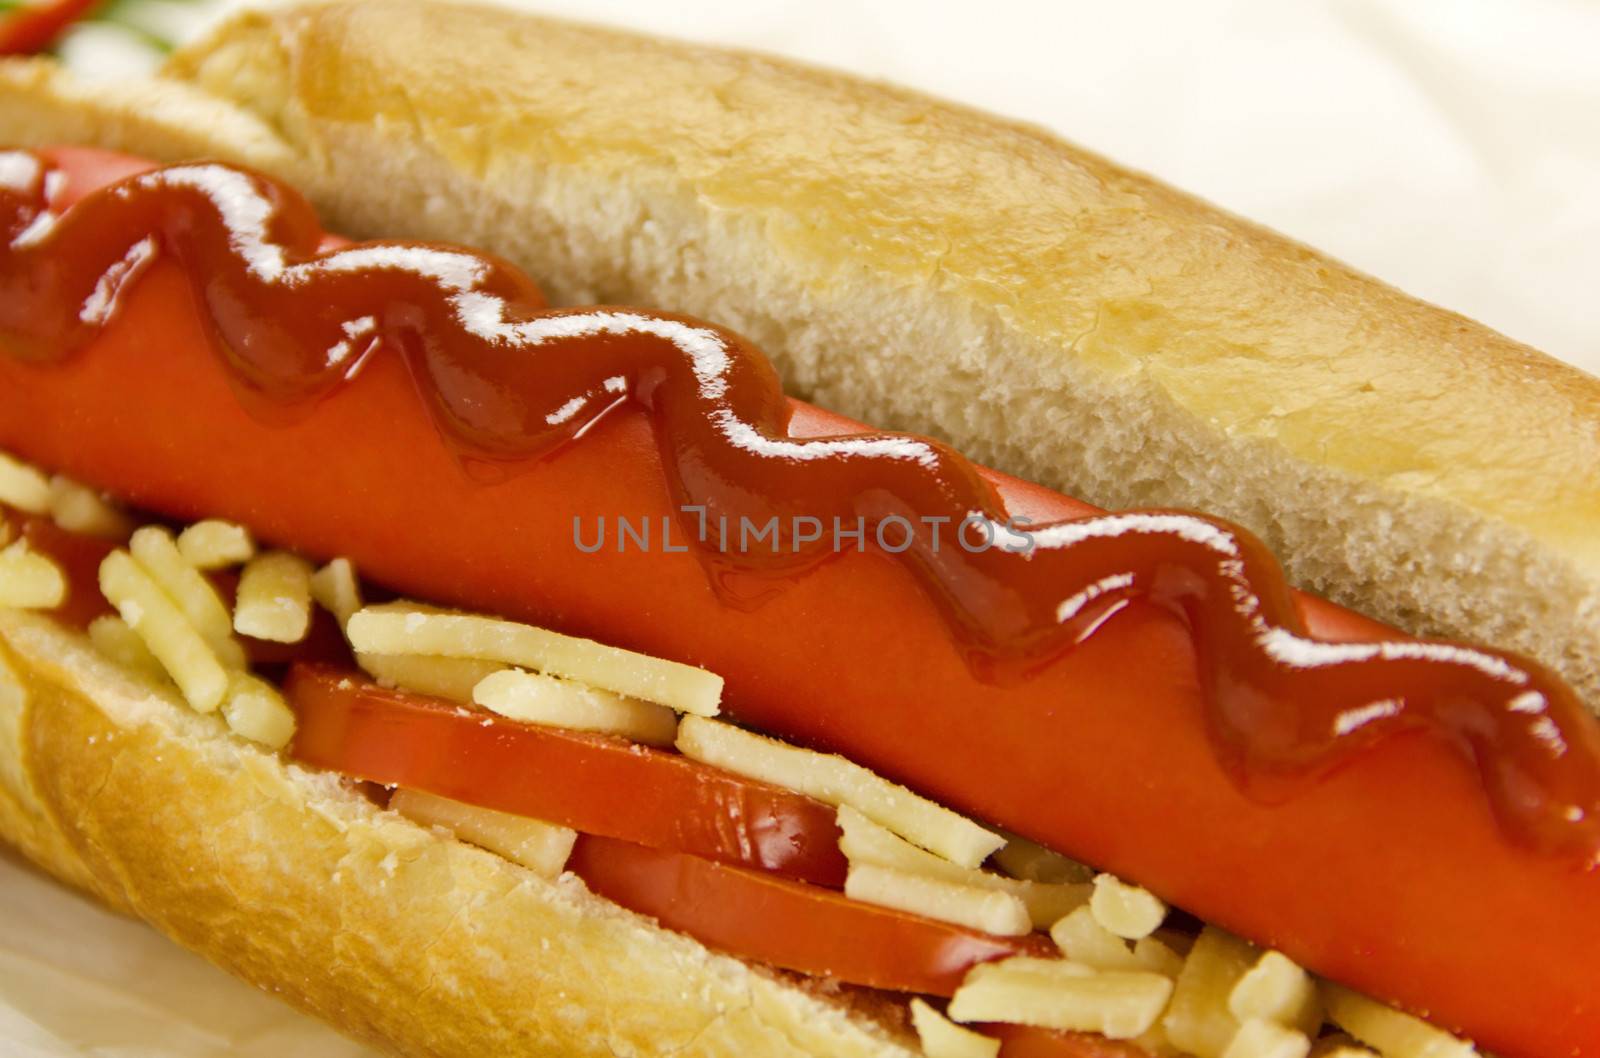 Hot Dog With Ketchup by jabiru